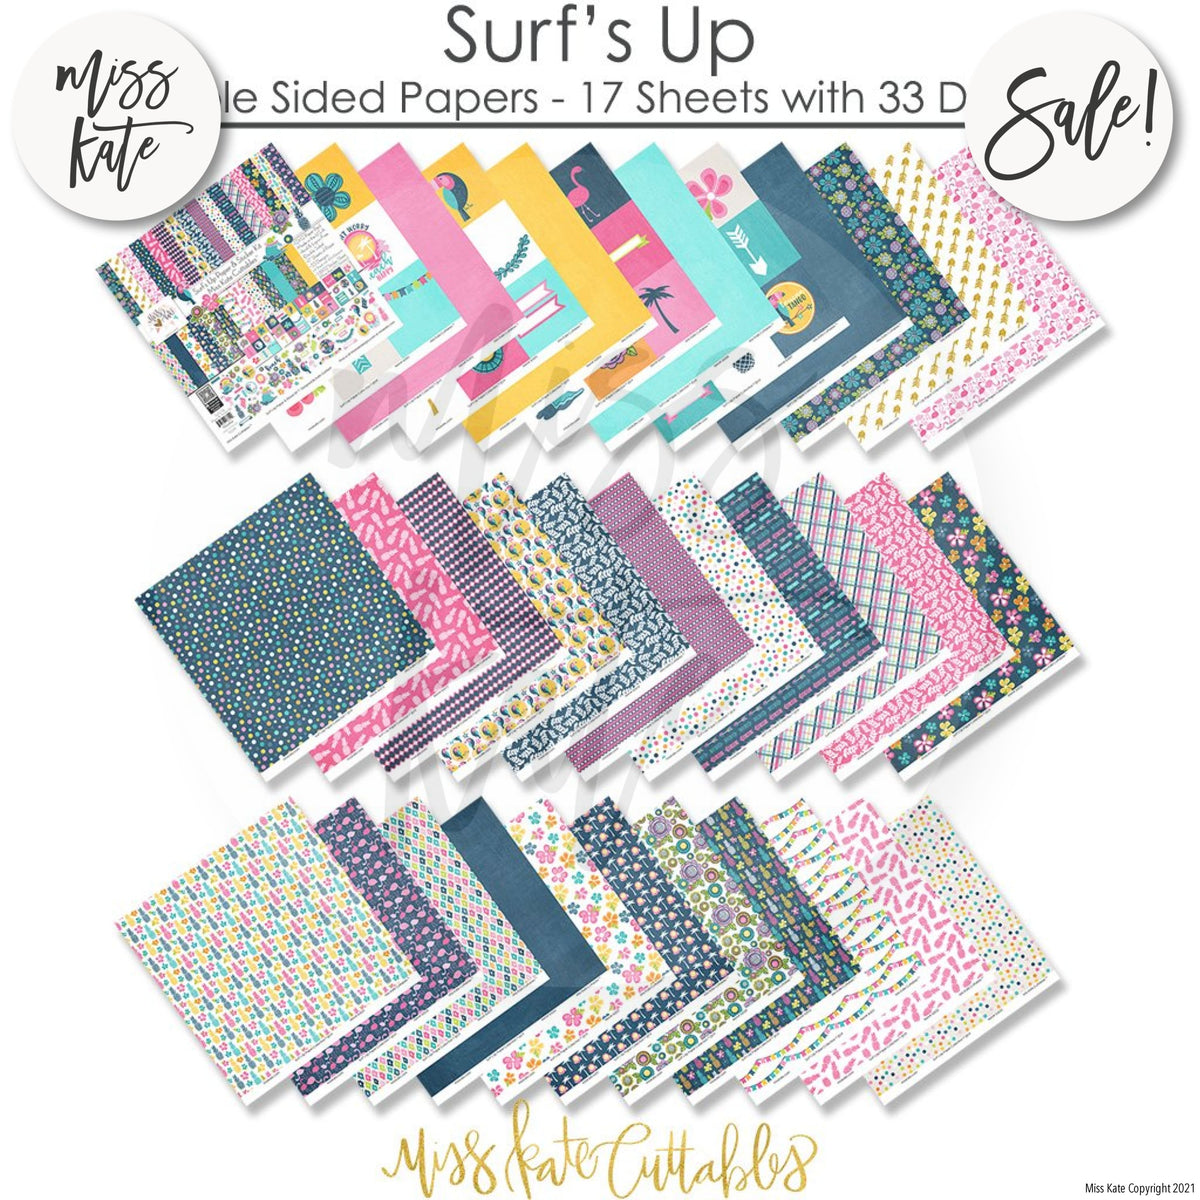 Surf's Up - Paper & Sticker Kit 12x12 Scrapbook Paper & Sticker Kit – MISS  KATE